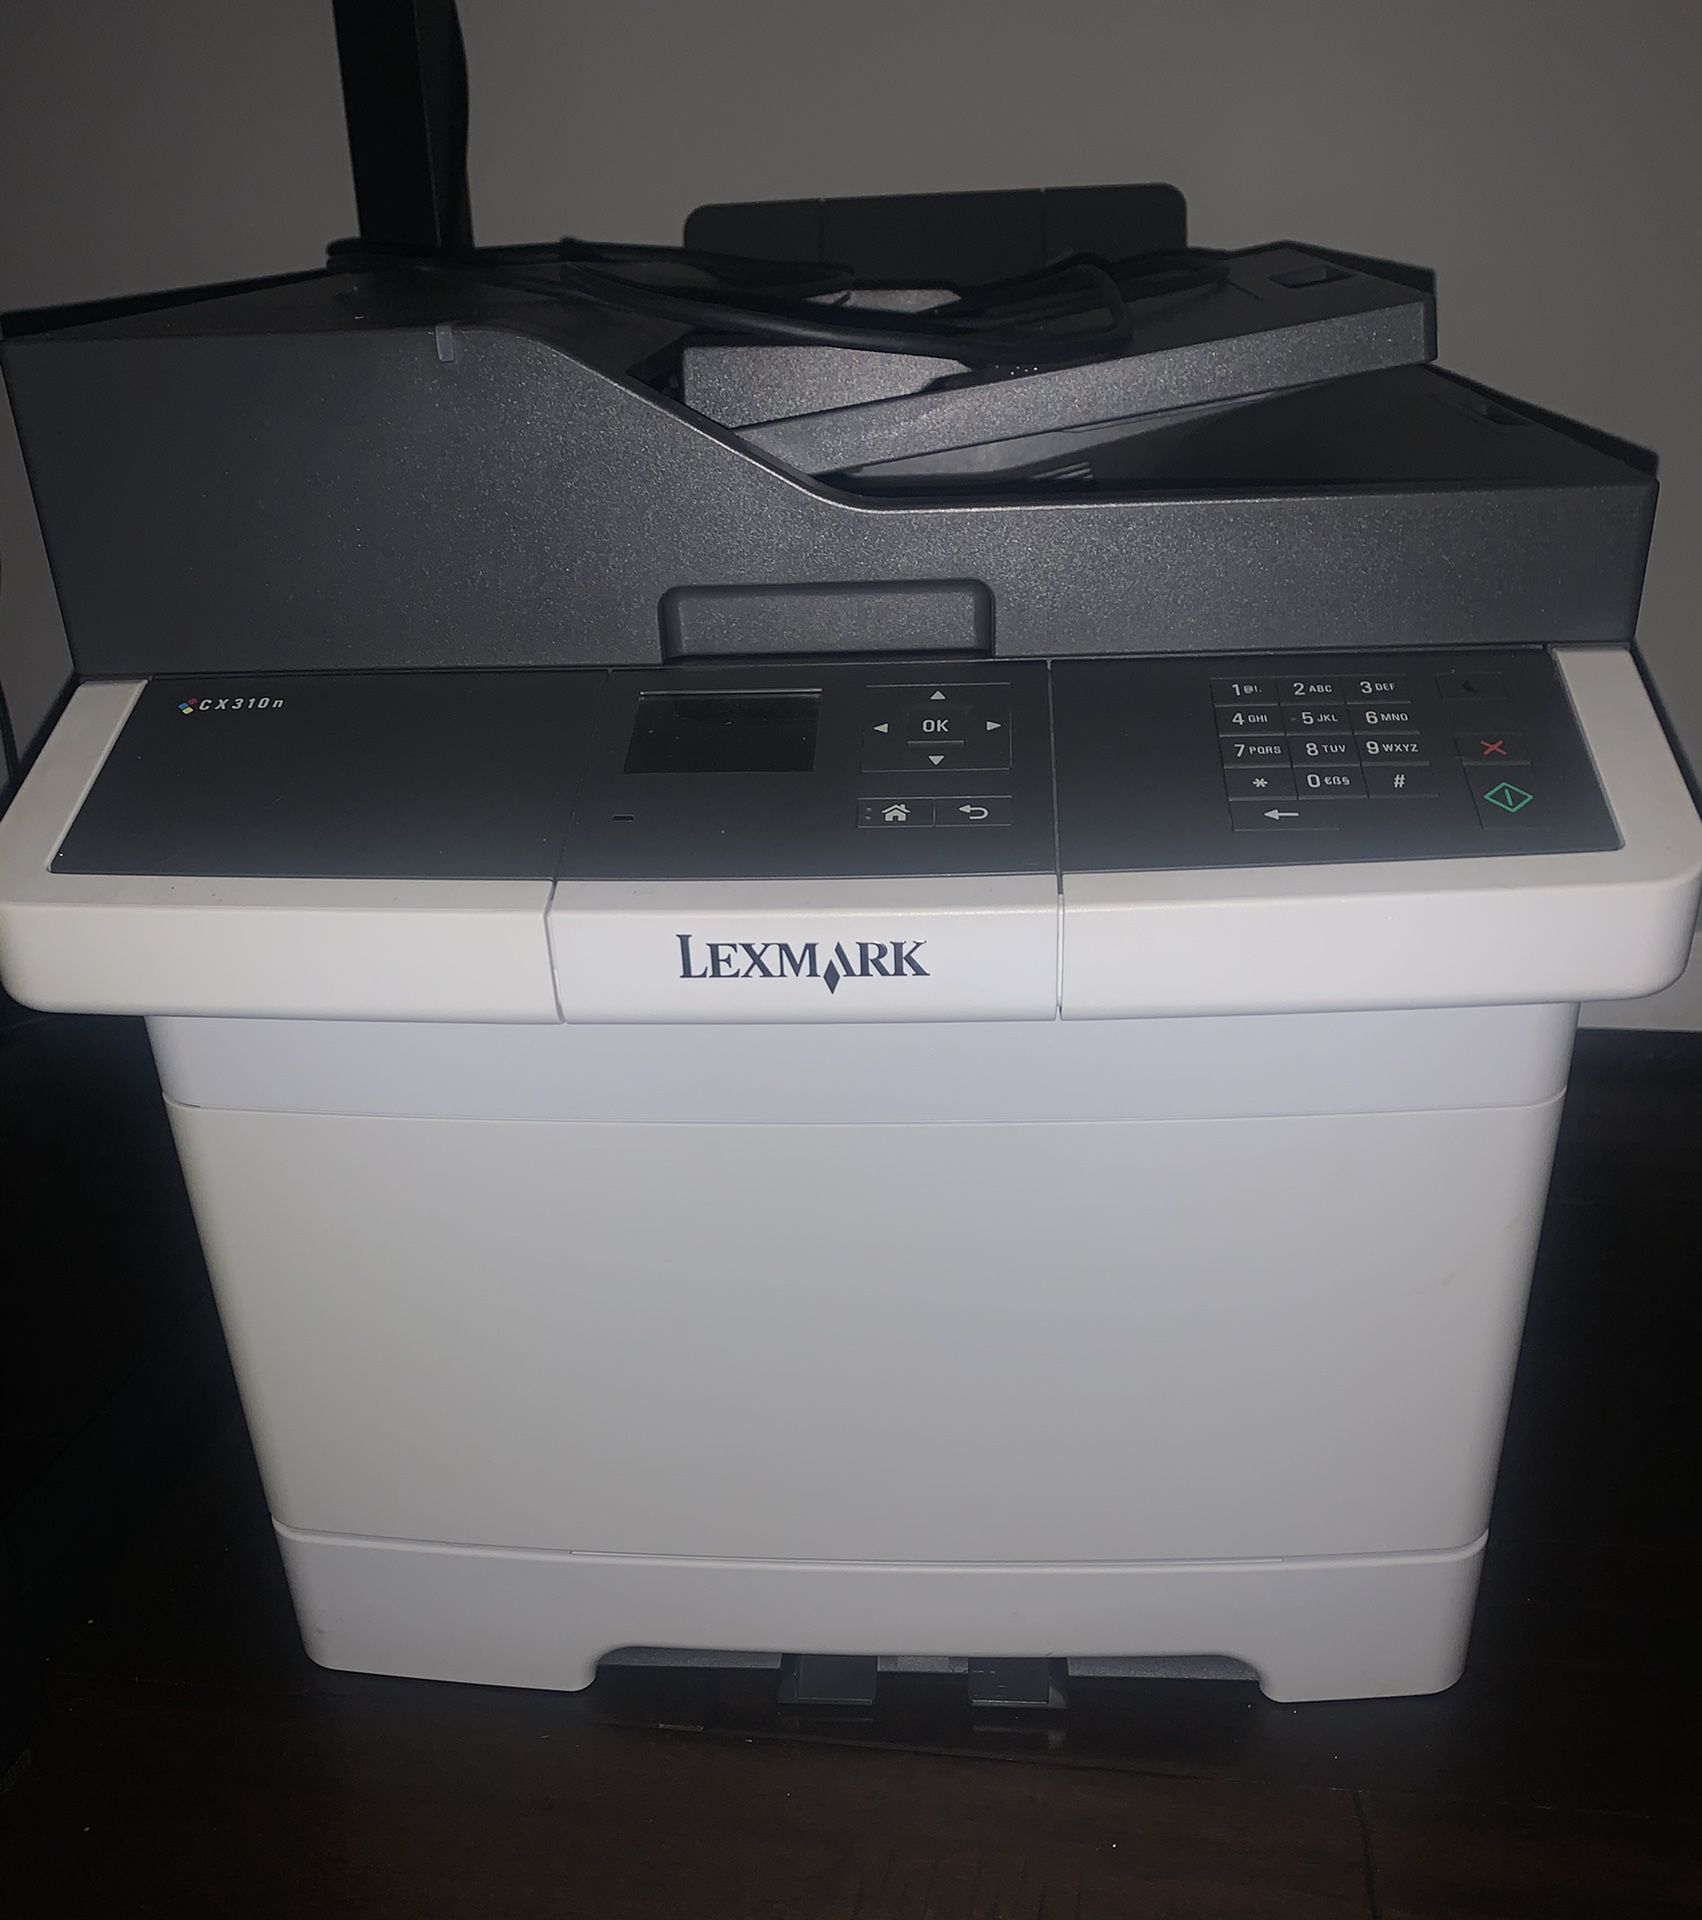 Lexmark cx310n printer/copier